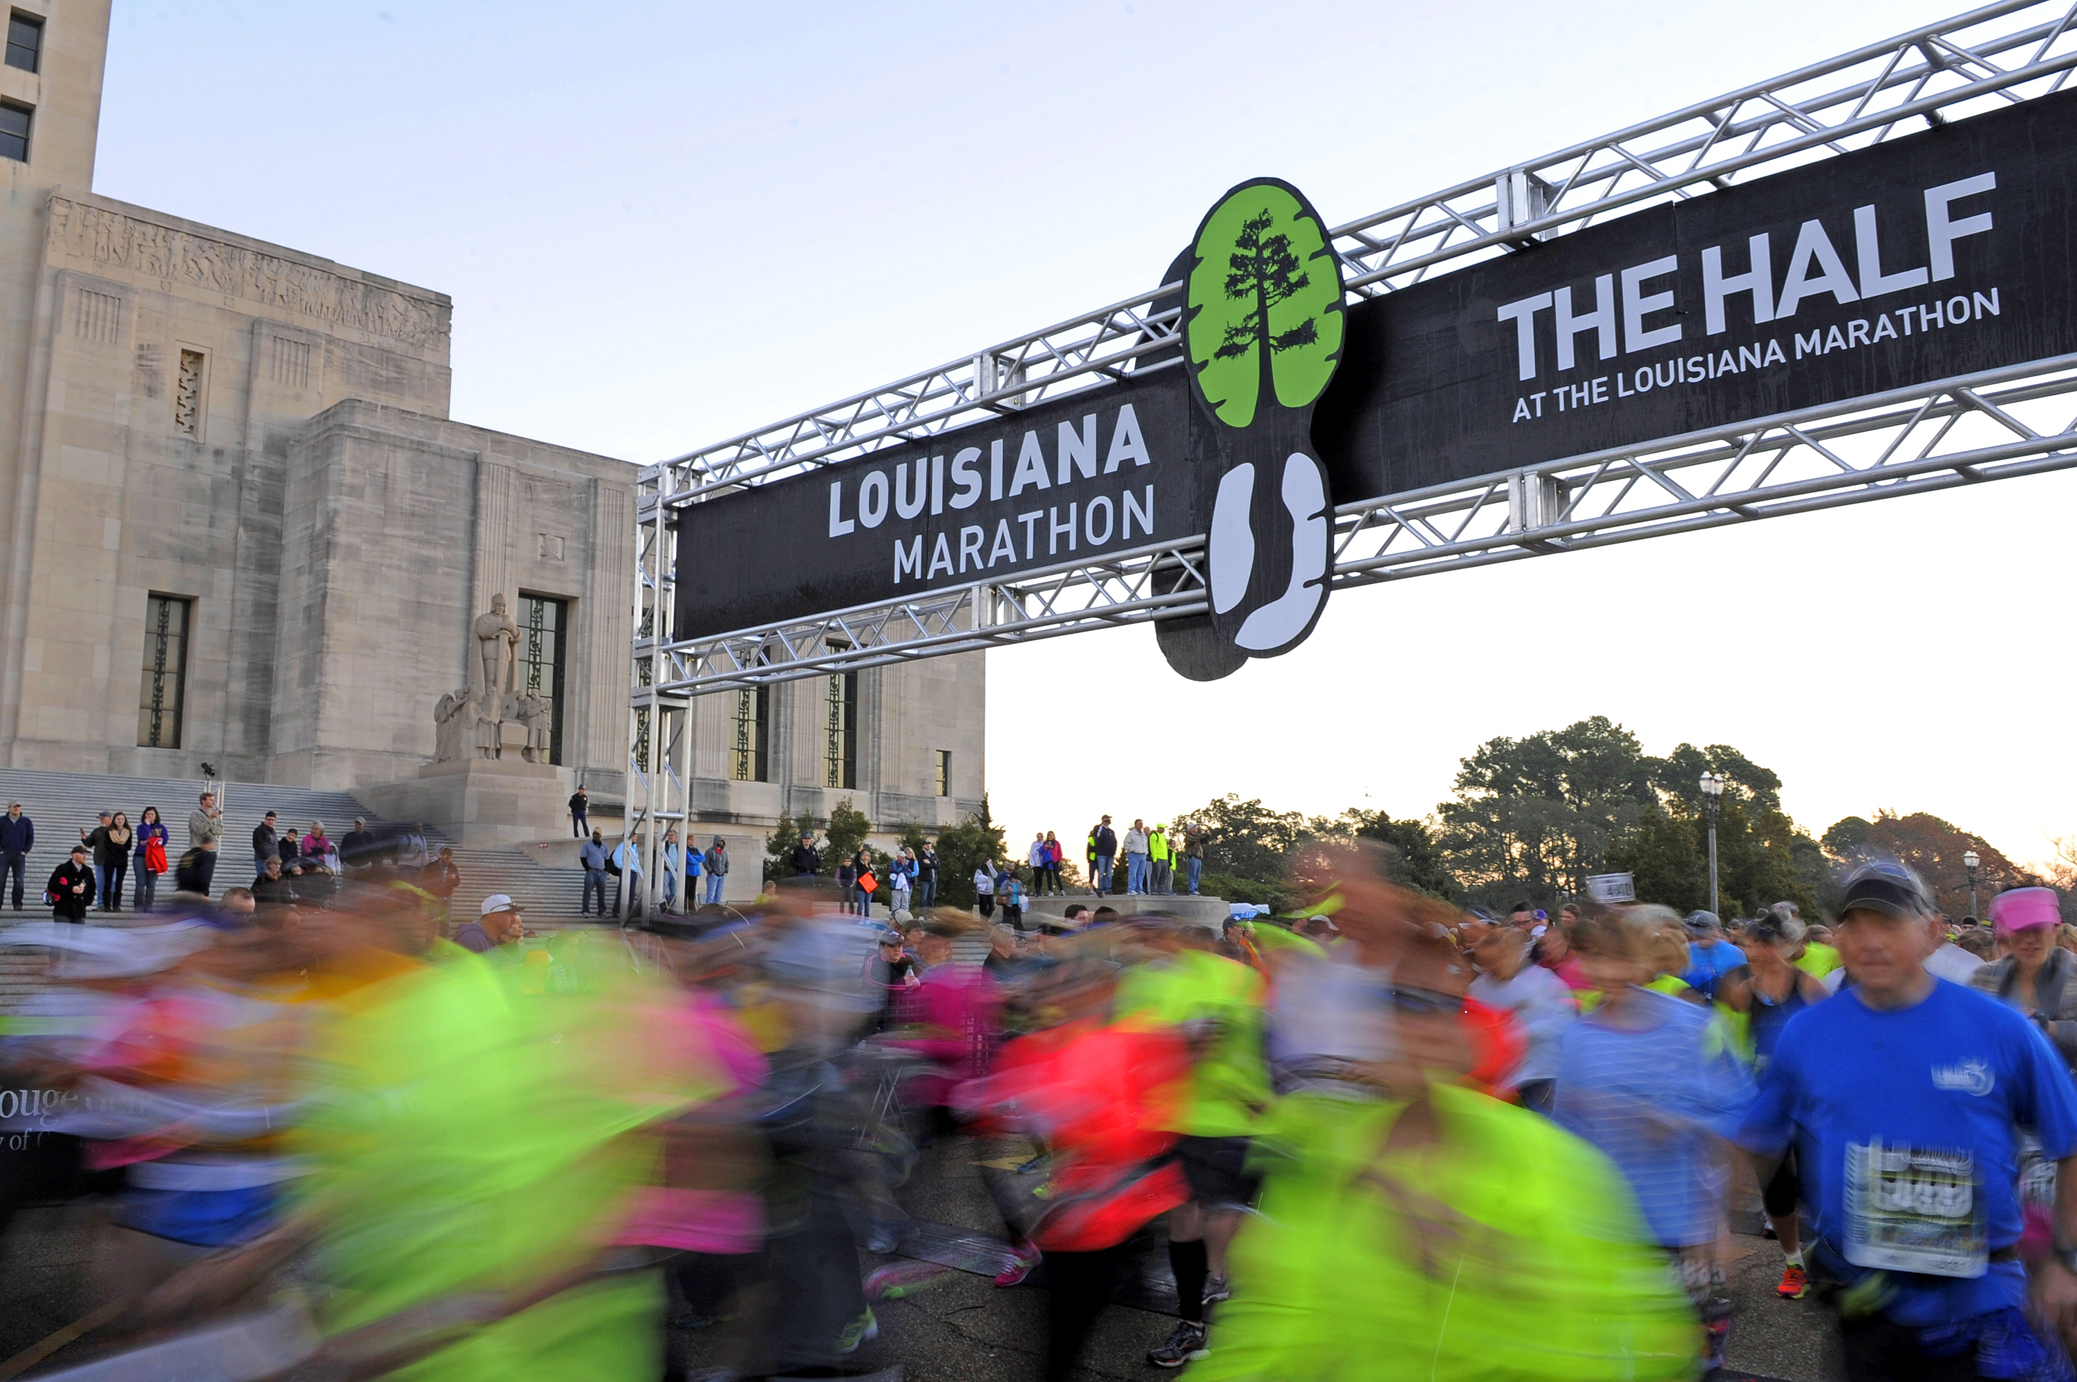 Louisiana Marathon and its finish line festival overtake the weekend